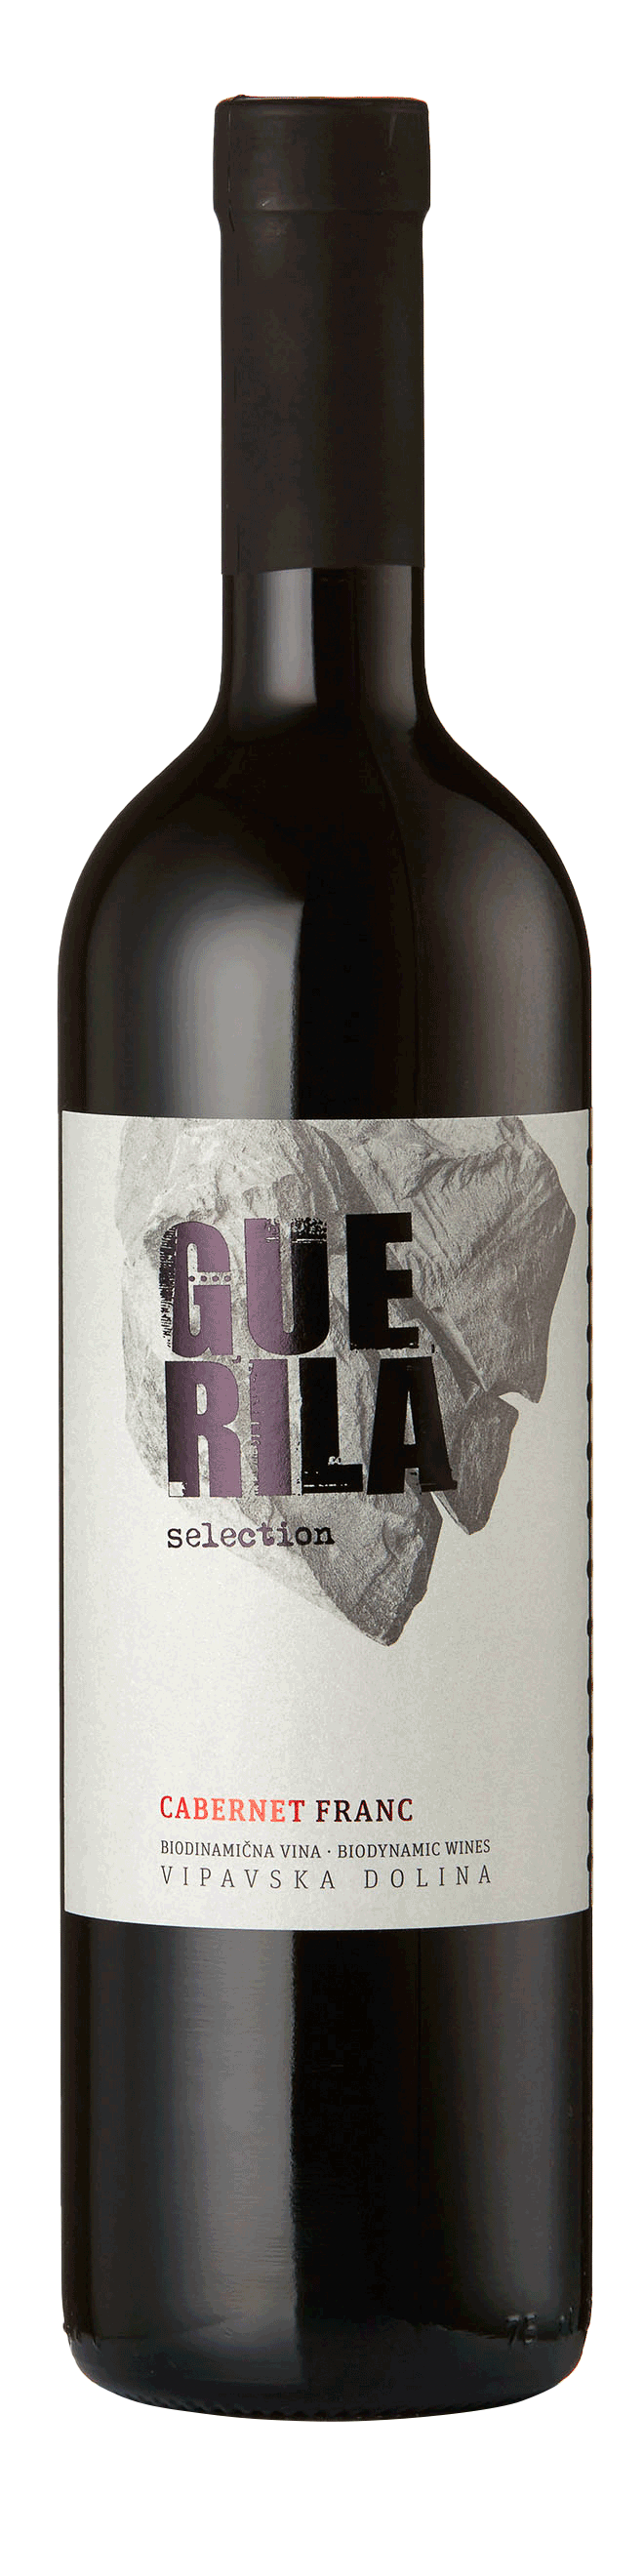 Bottle shot - Guerila, Cabernet Franc Selection, Vipava Valley, Slovenia